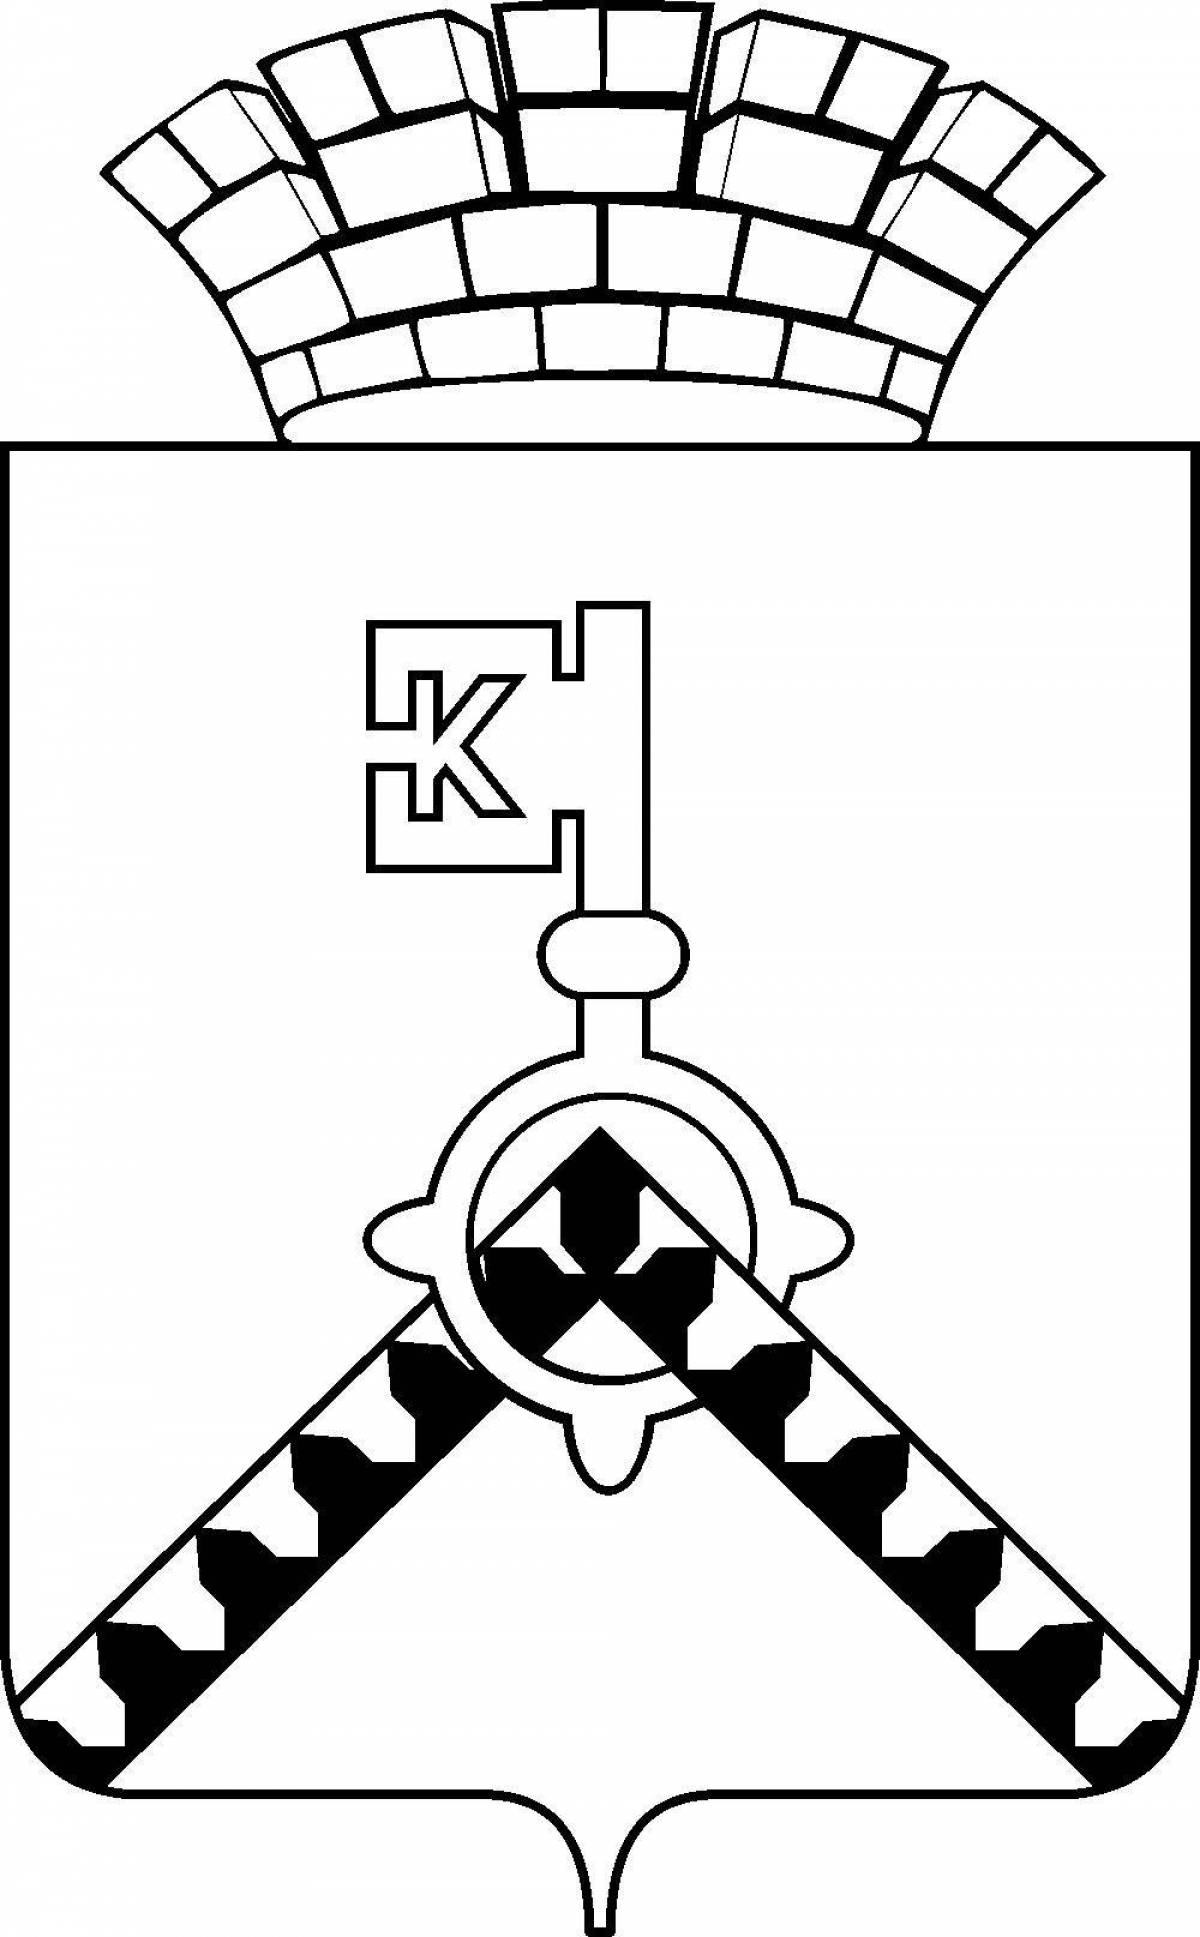 Big coat of arms of the Kirov region